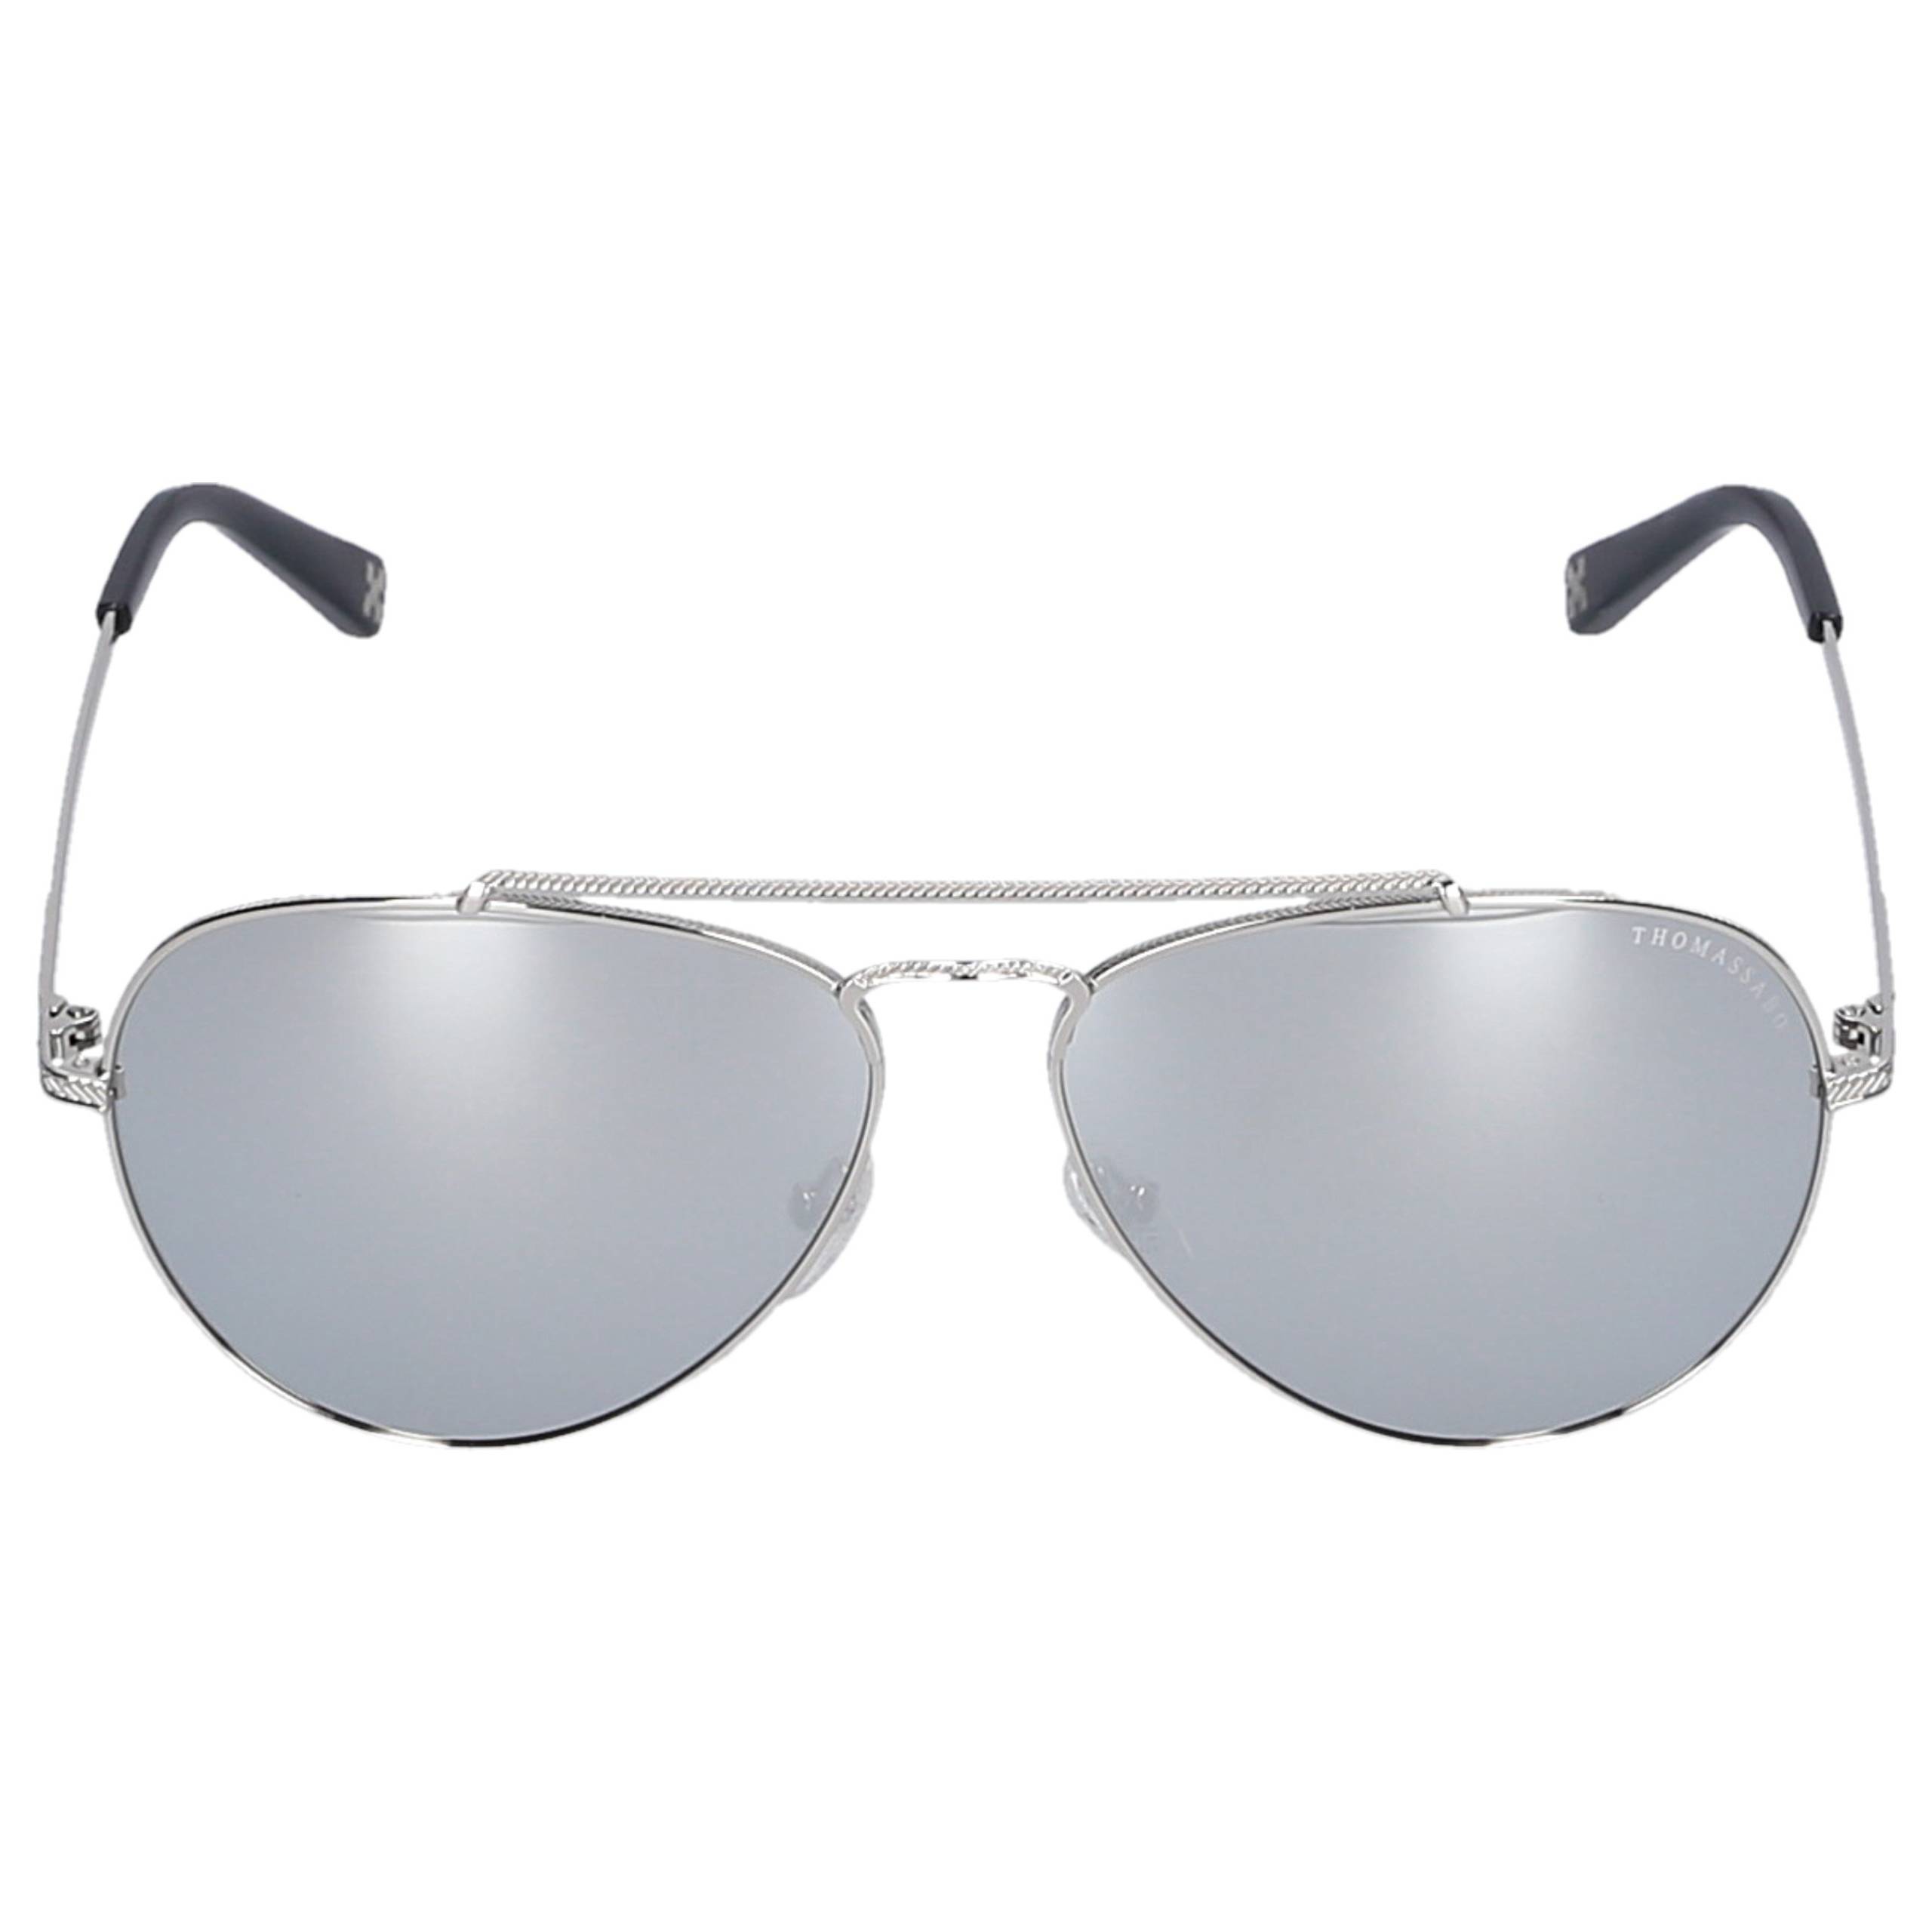 Sonnenbrille Aviator 044114 Metall silber